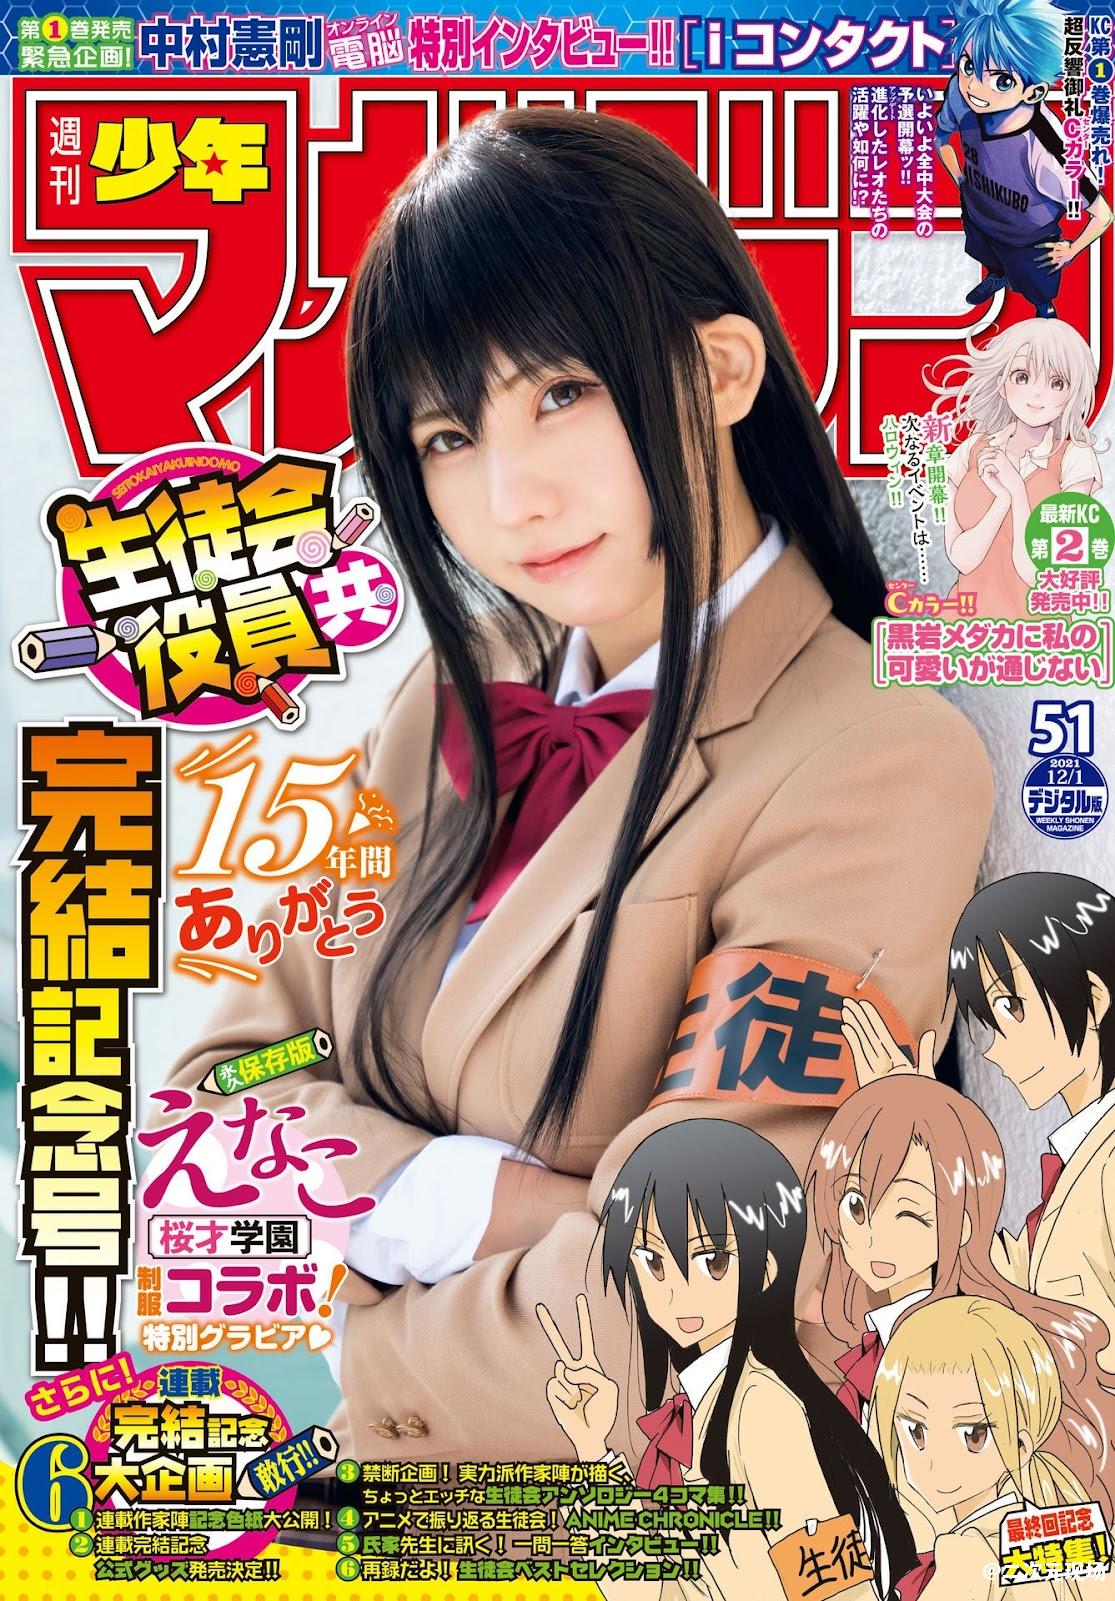 enako-少年Magazine 2021.12.01 No.51